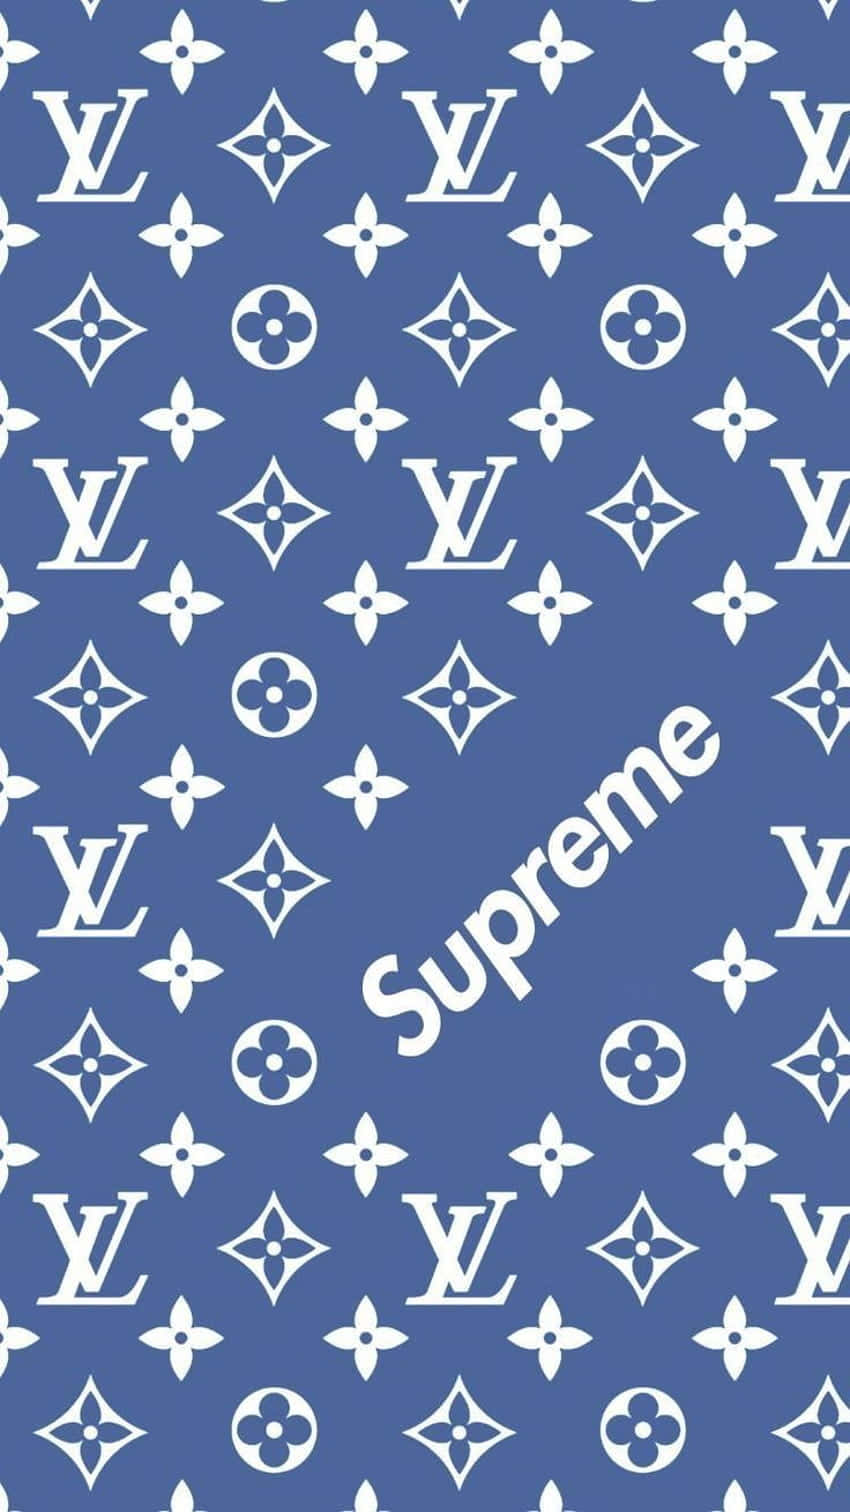 Free download Supreme x Louis Vuitton Brands Hypebeast wallpaper